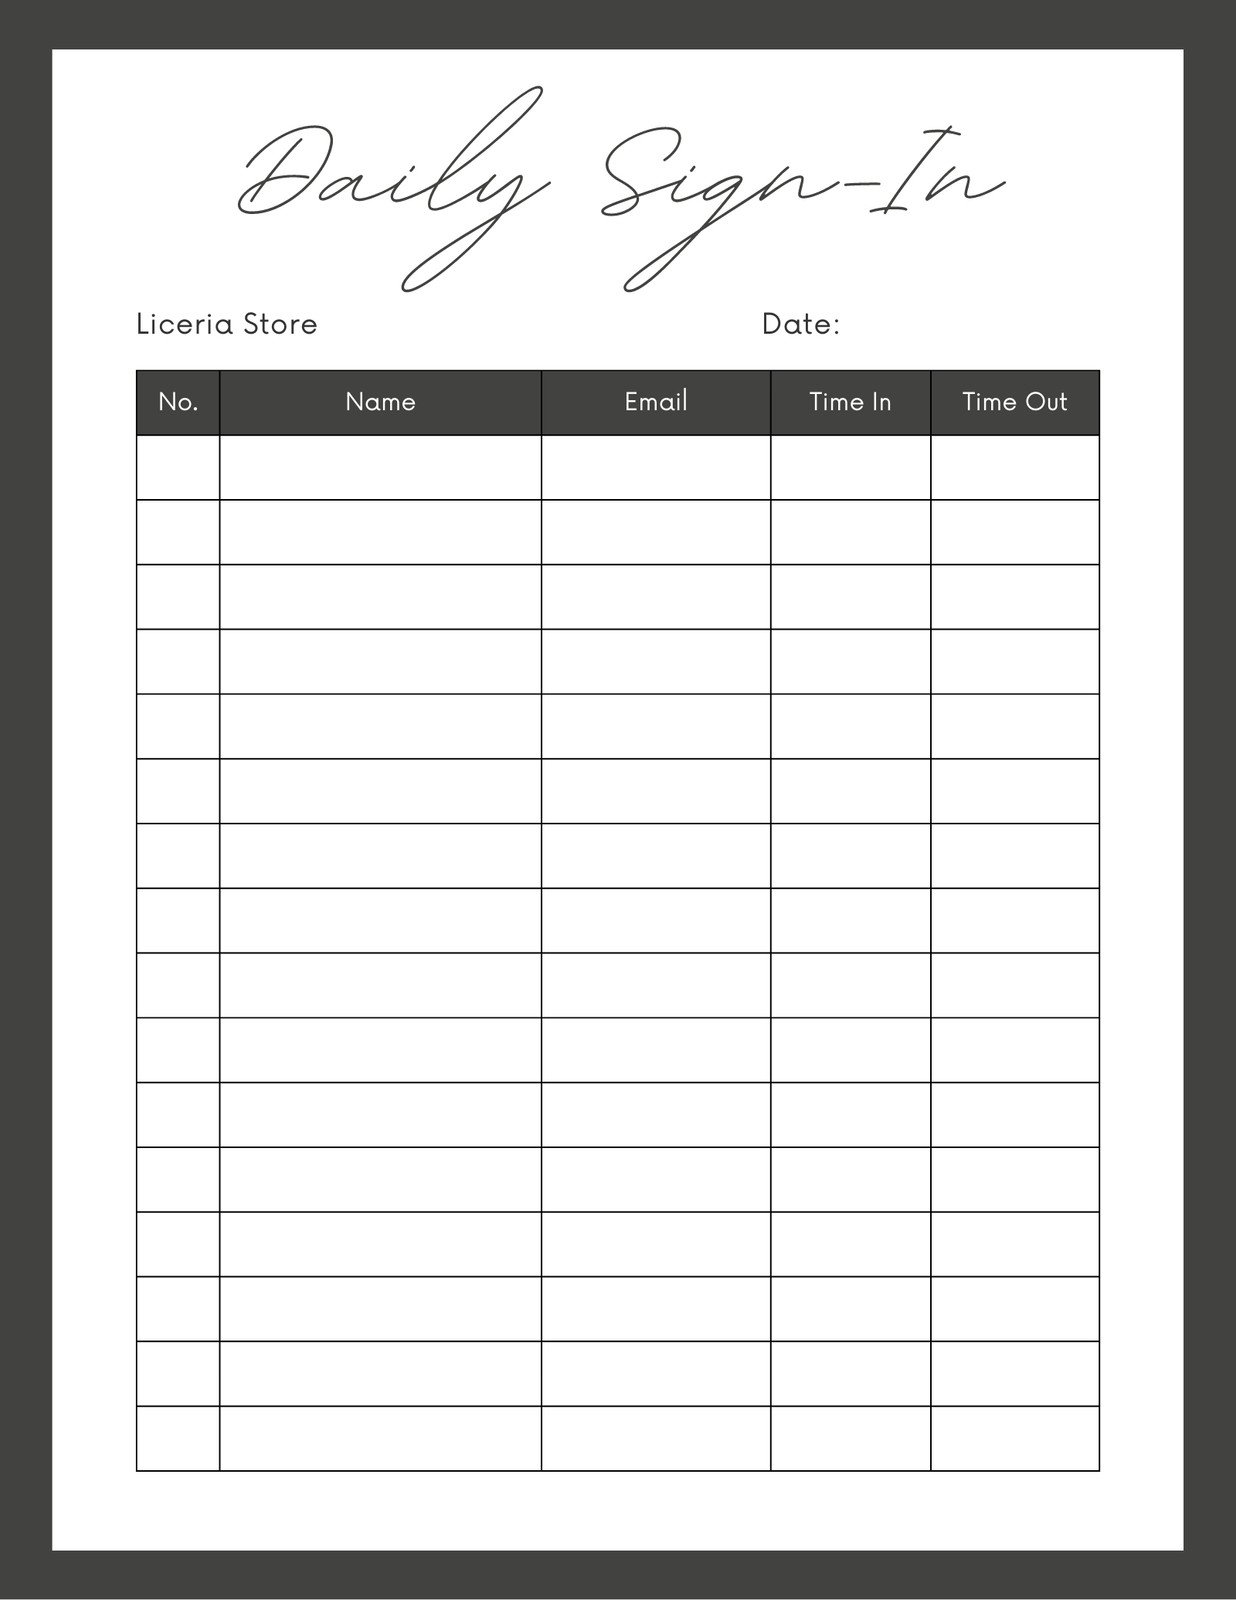 Black & White Minimal Daily Sign In Sheet or Log